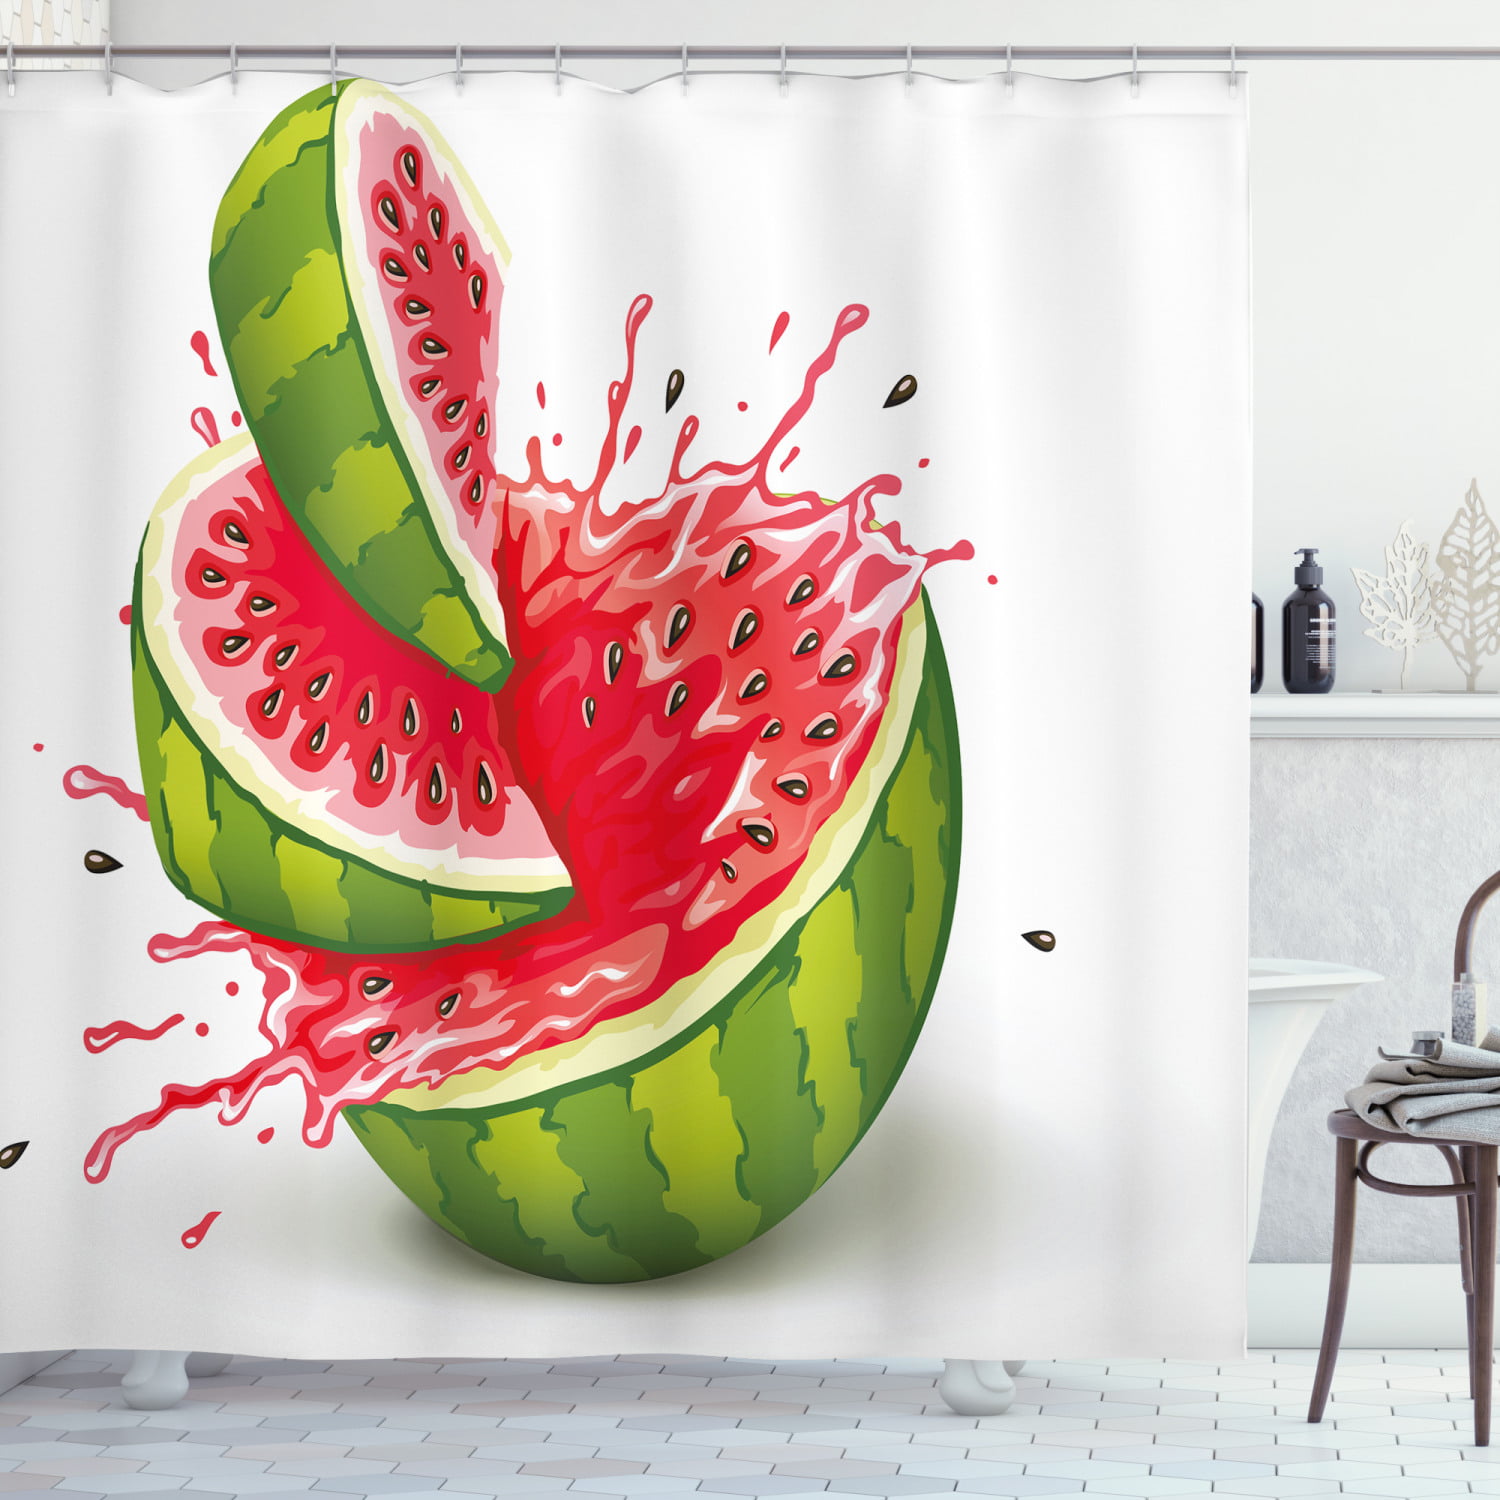 Bathroom Decor Watercolor Watermelon Shower Curtain Waterproof Fabric & 12 Hooks 